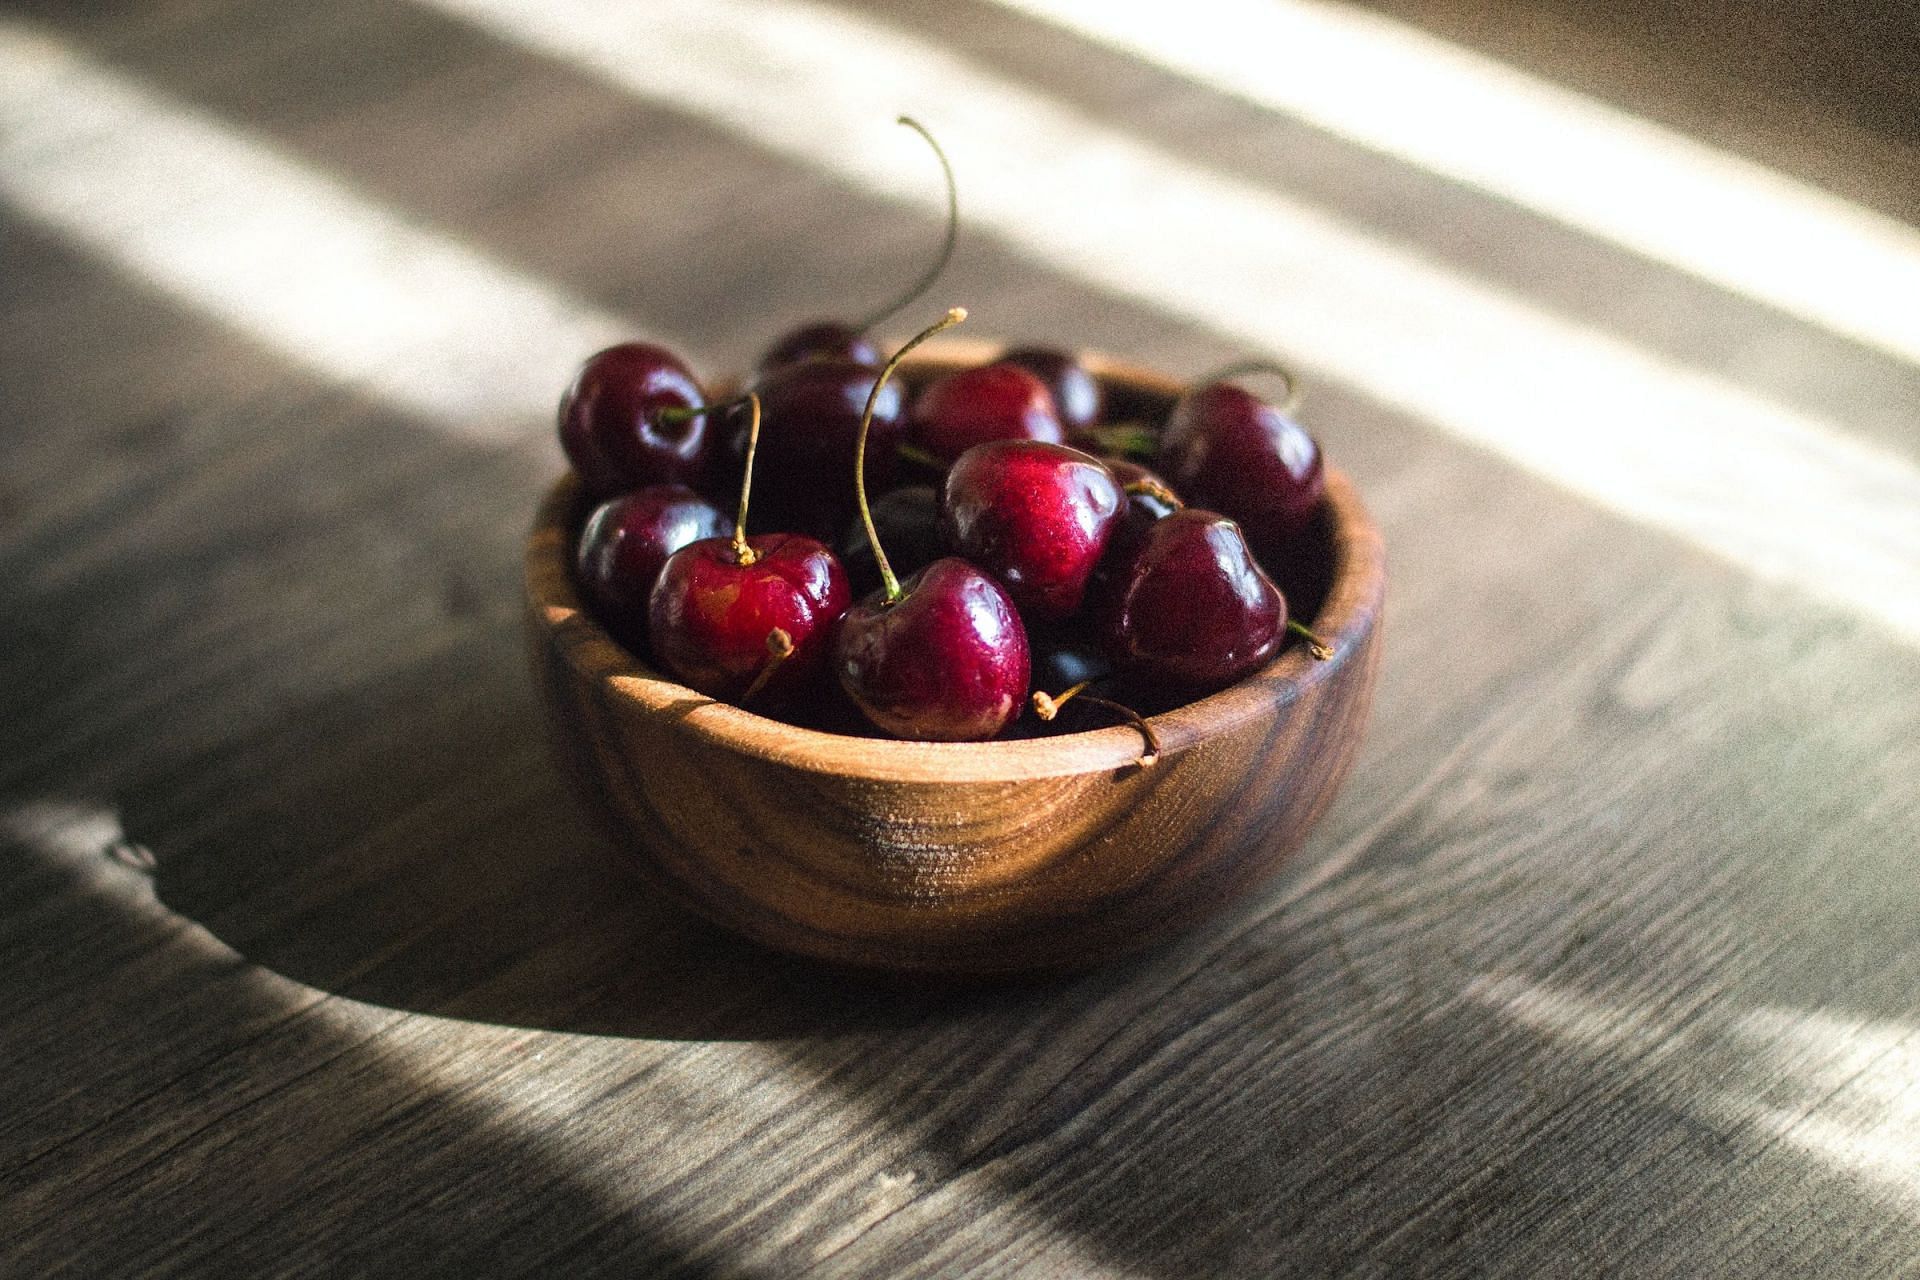 Cherries contain loads of antioxidants. (Image via Unsplash/Mohammad Amin Masoudi)